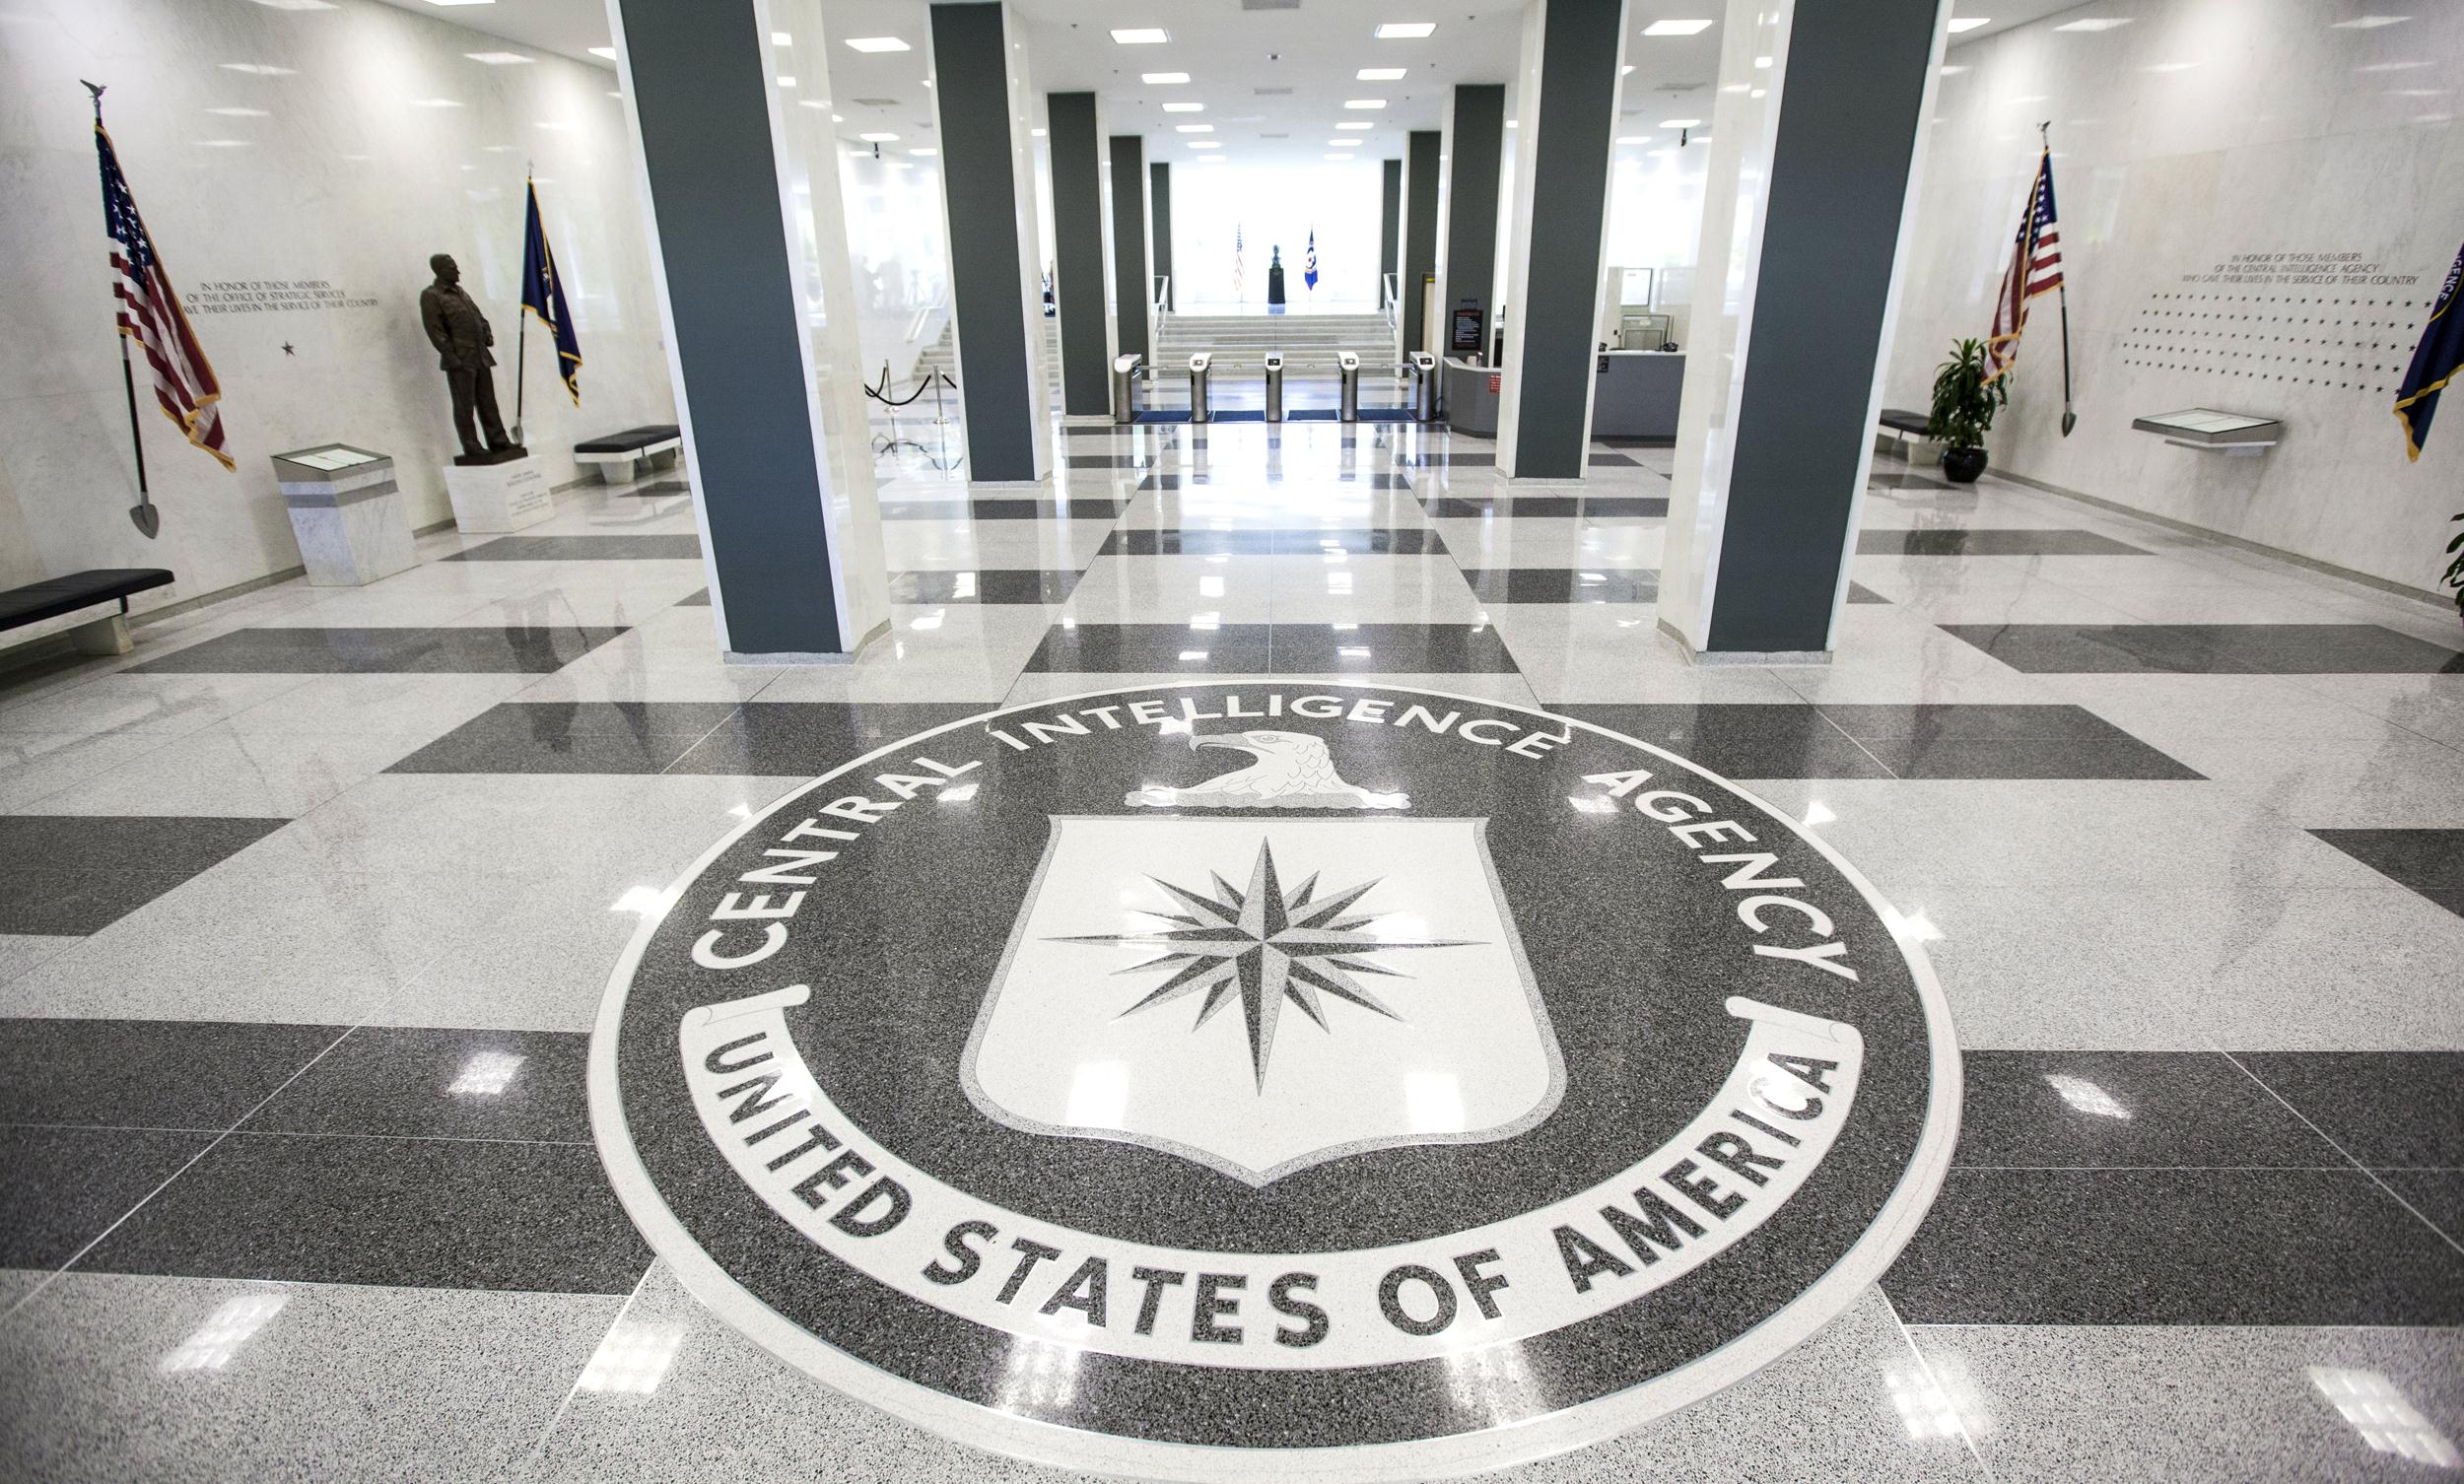 Daily Telegraph: H CIA βασάνισε υπόπτους της αλ-Κάιντα